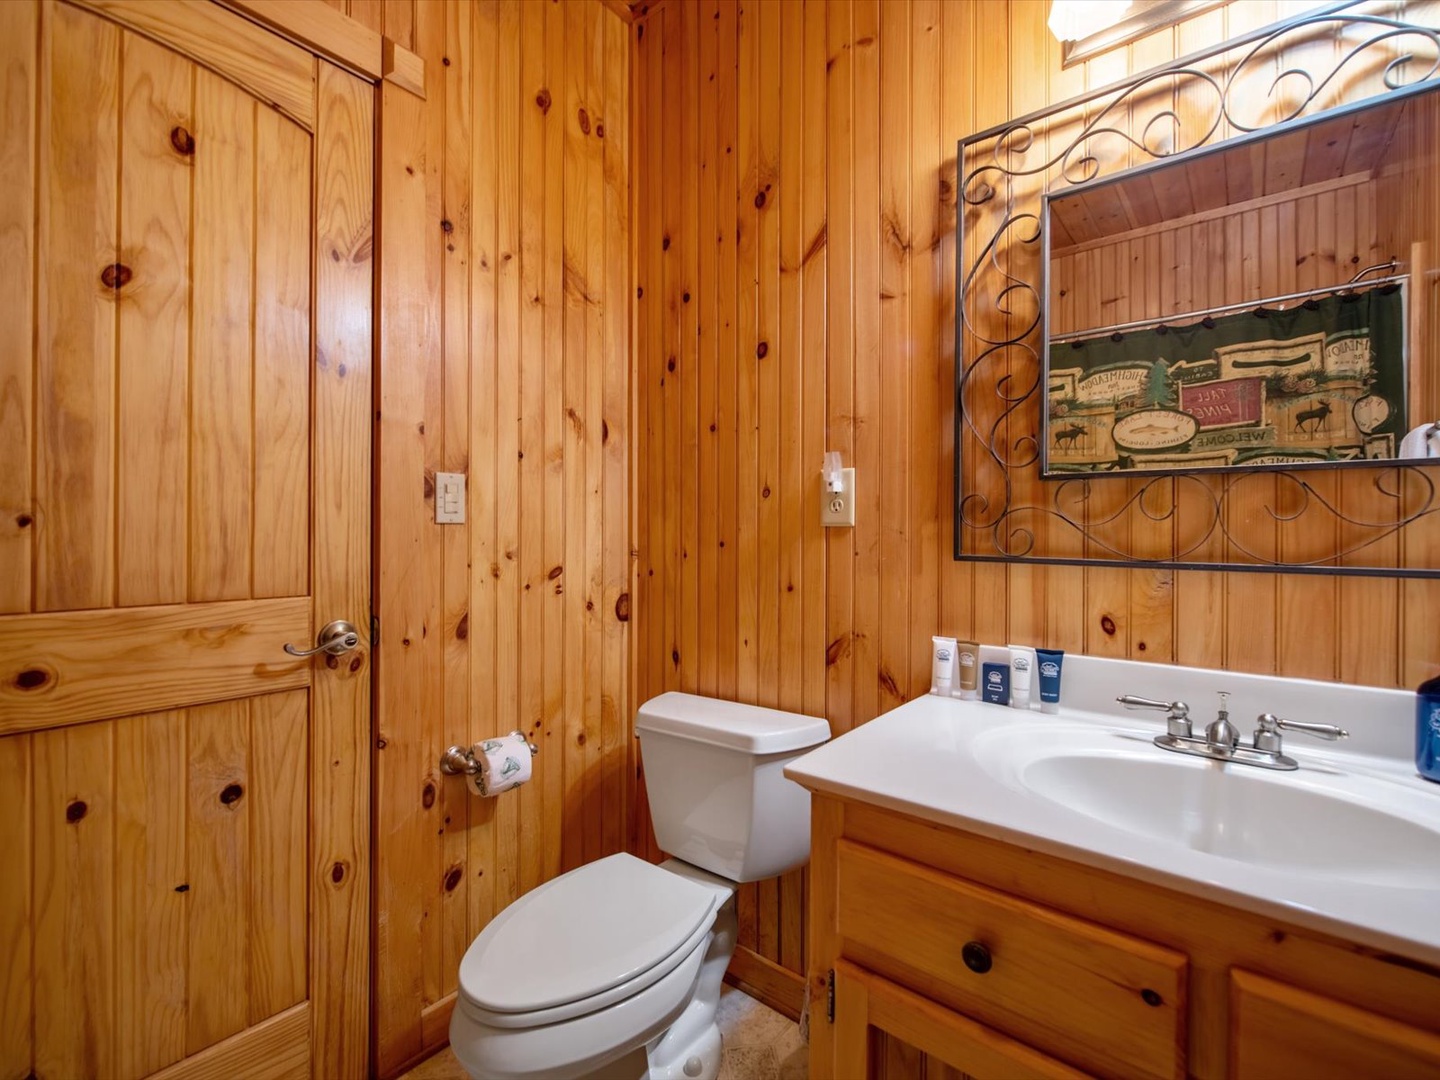 Babbling Brook- Lower level bathroom